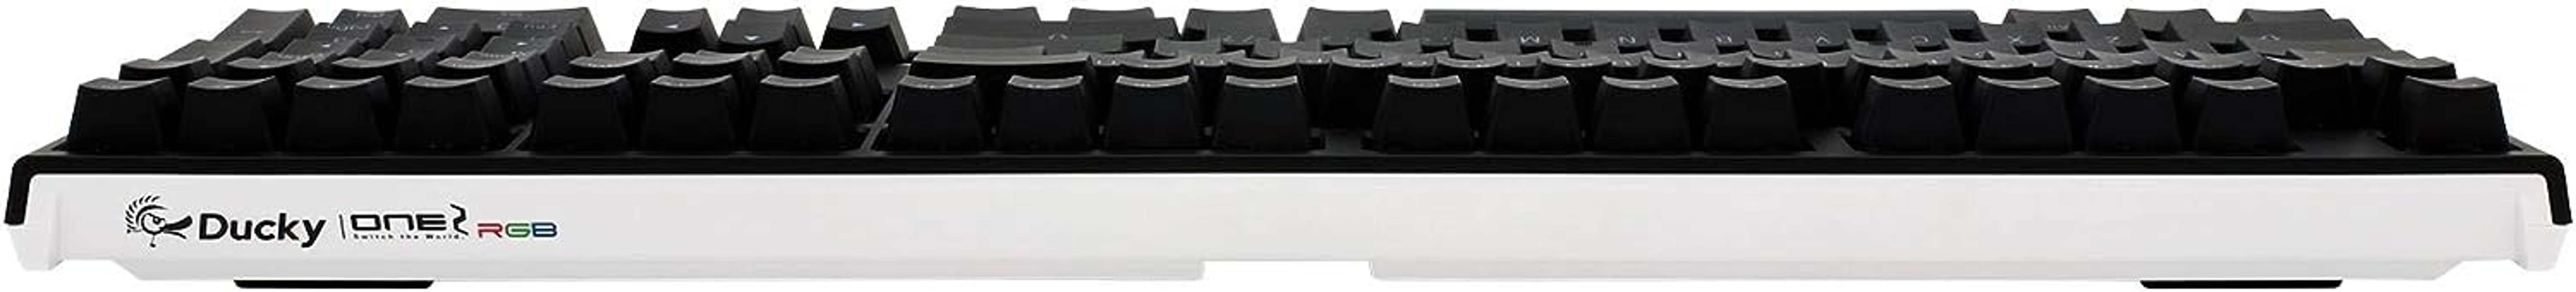 DKON1808ST-PUSPDAZT1, DUCKY Tastatur